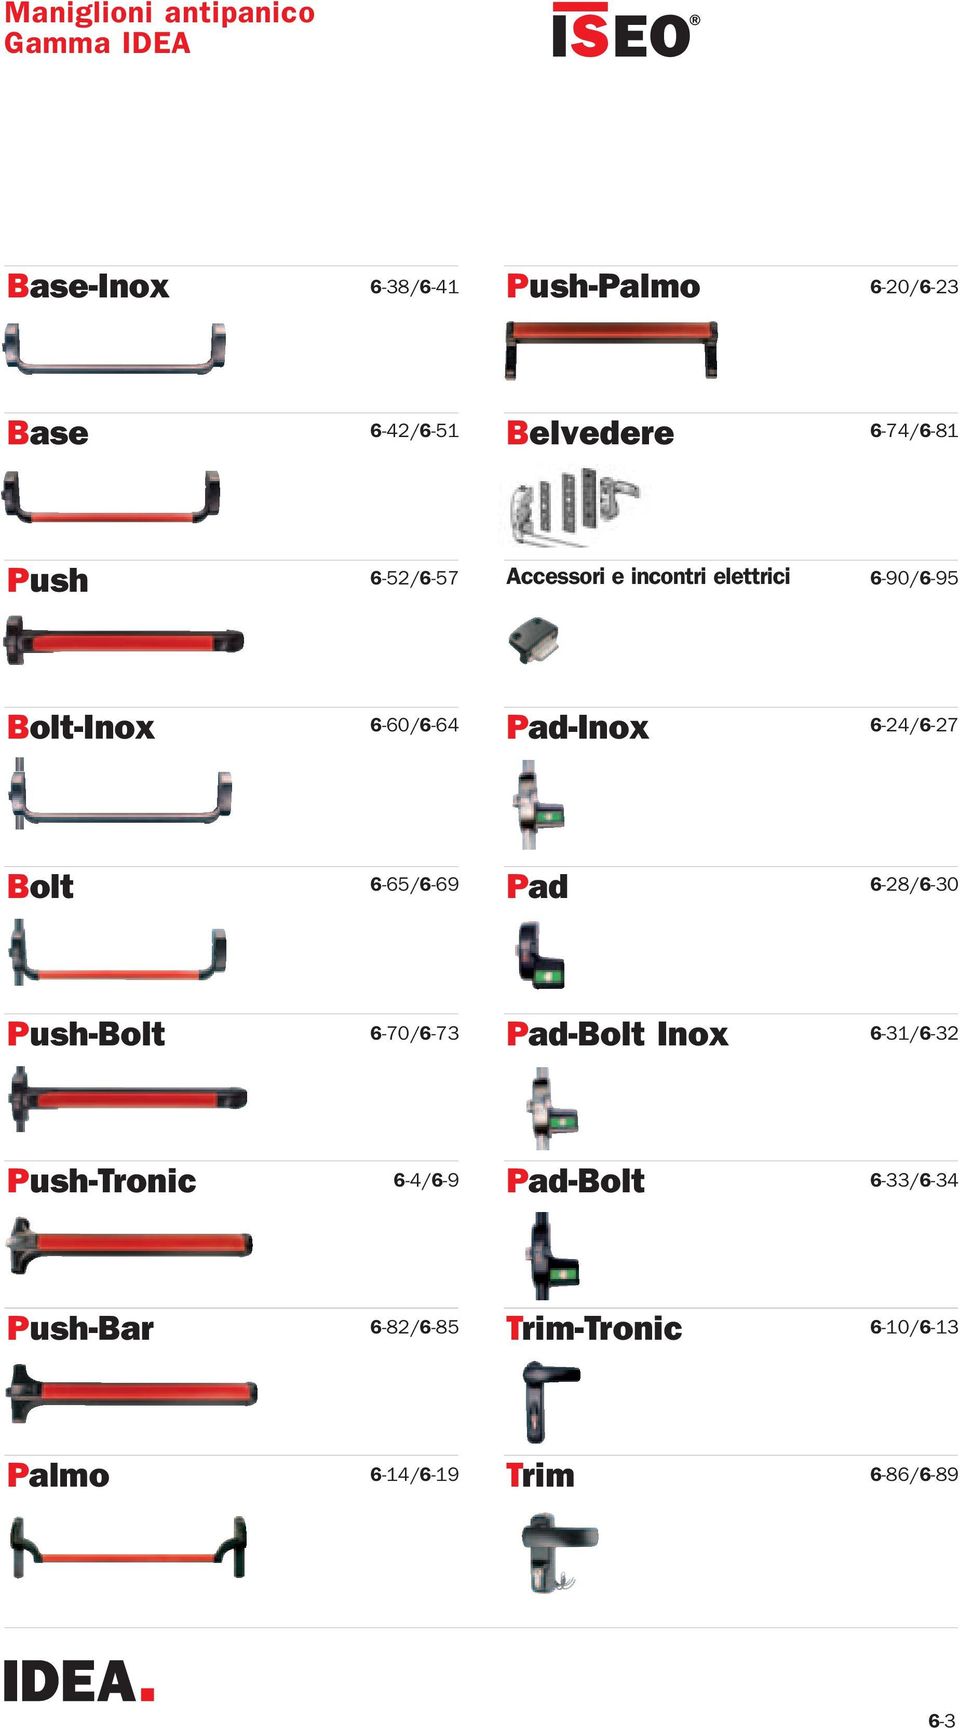 Bolt 6-65/6-69 Pad 6-28/6-30 Push-Bolt 6-70/6-73 Pad-Bolt Inox 6-31/6-32 Push-Tronic 6-4/6-9